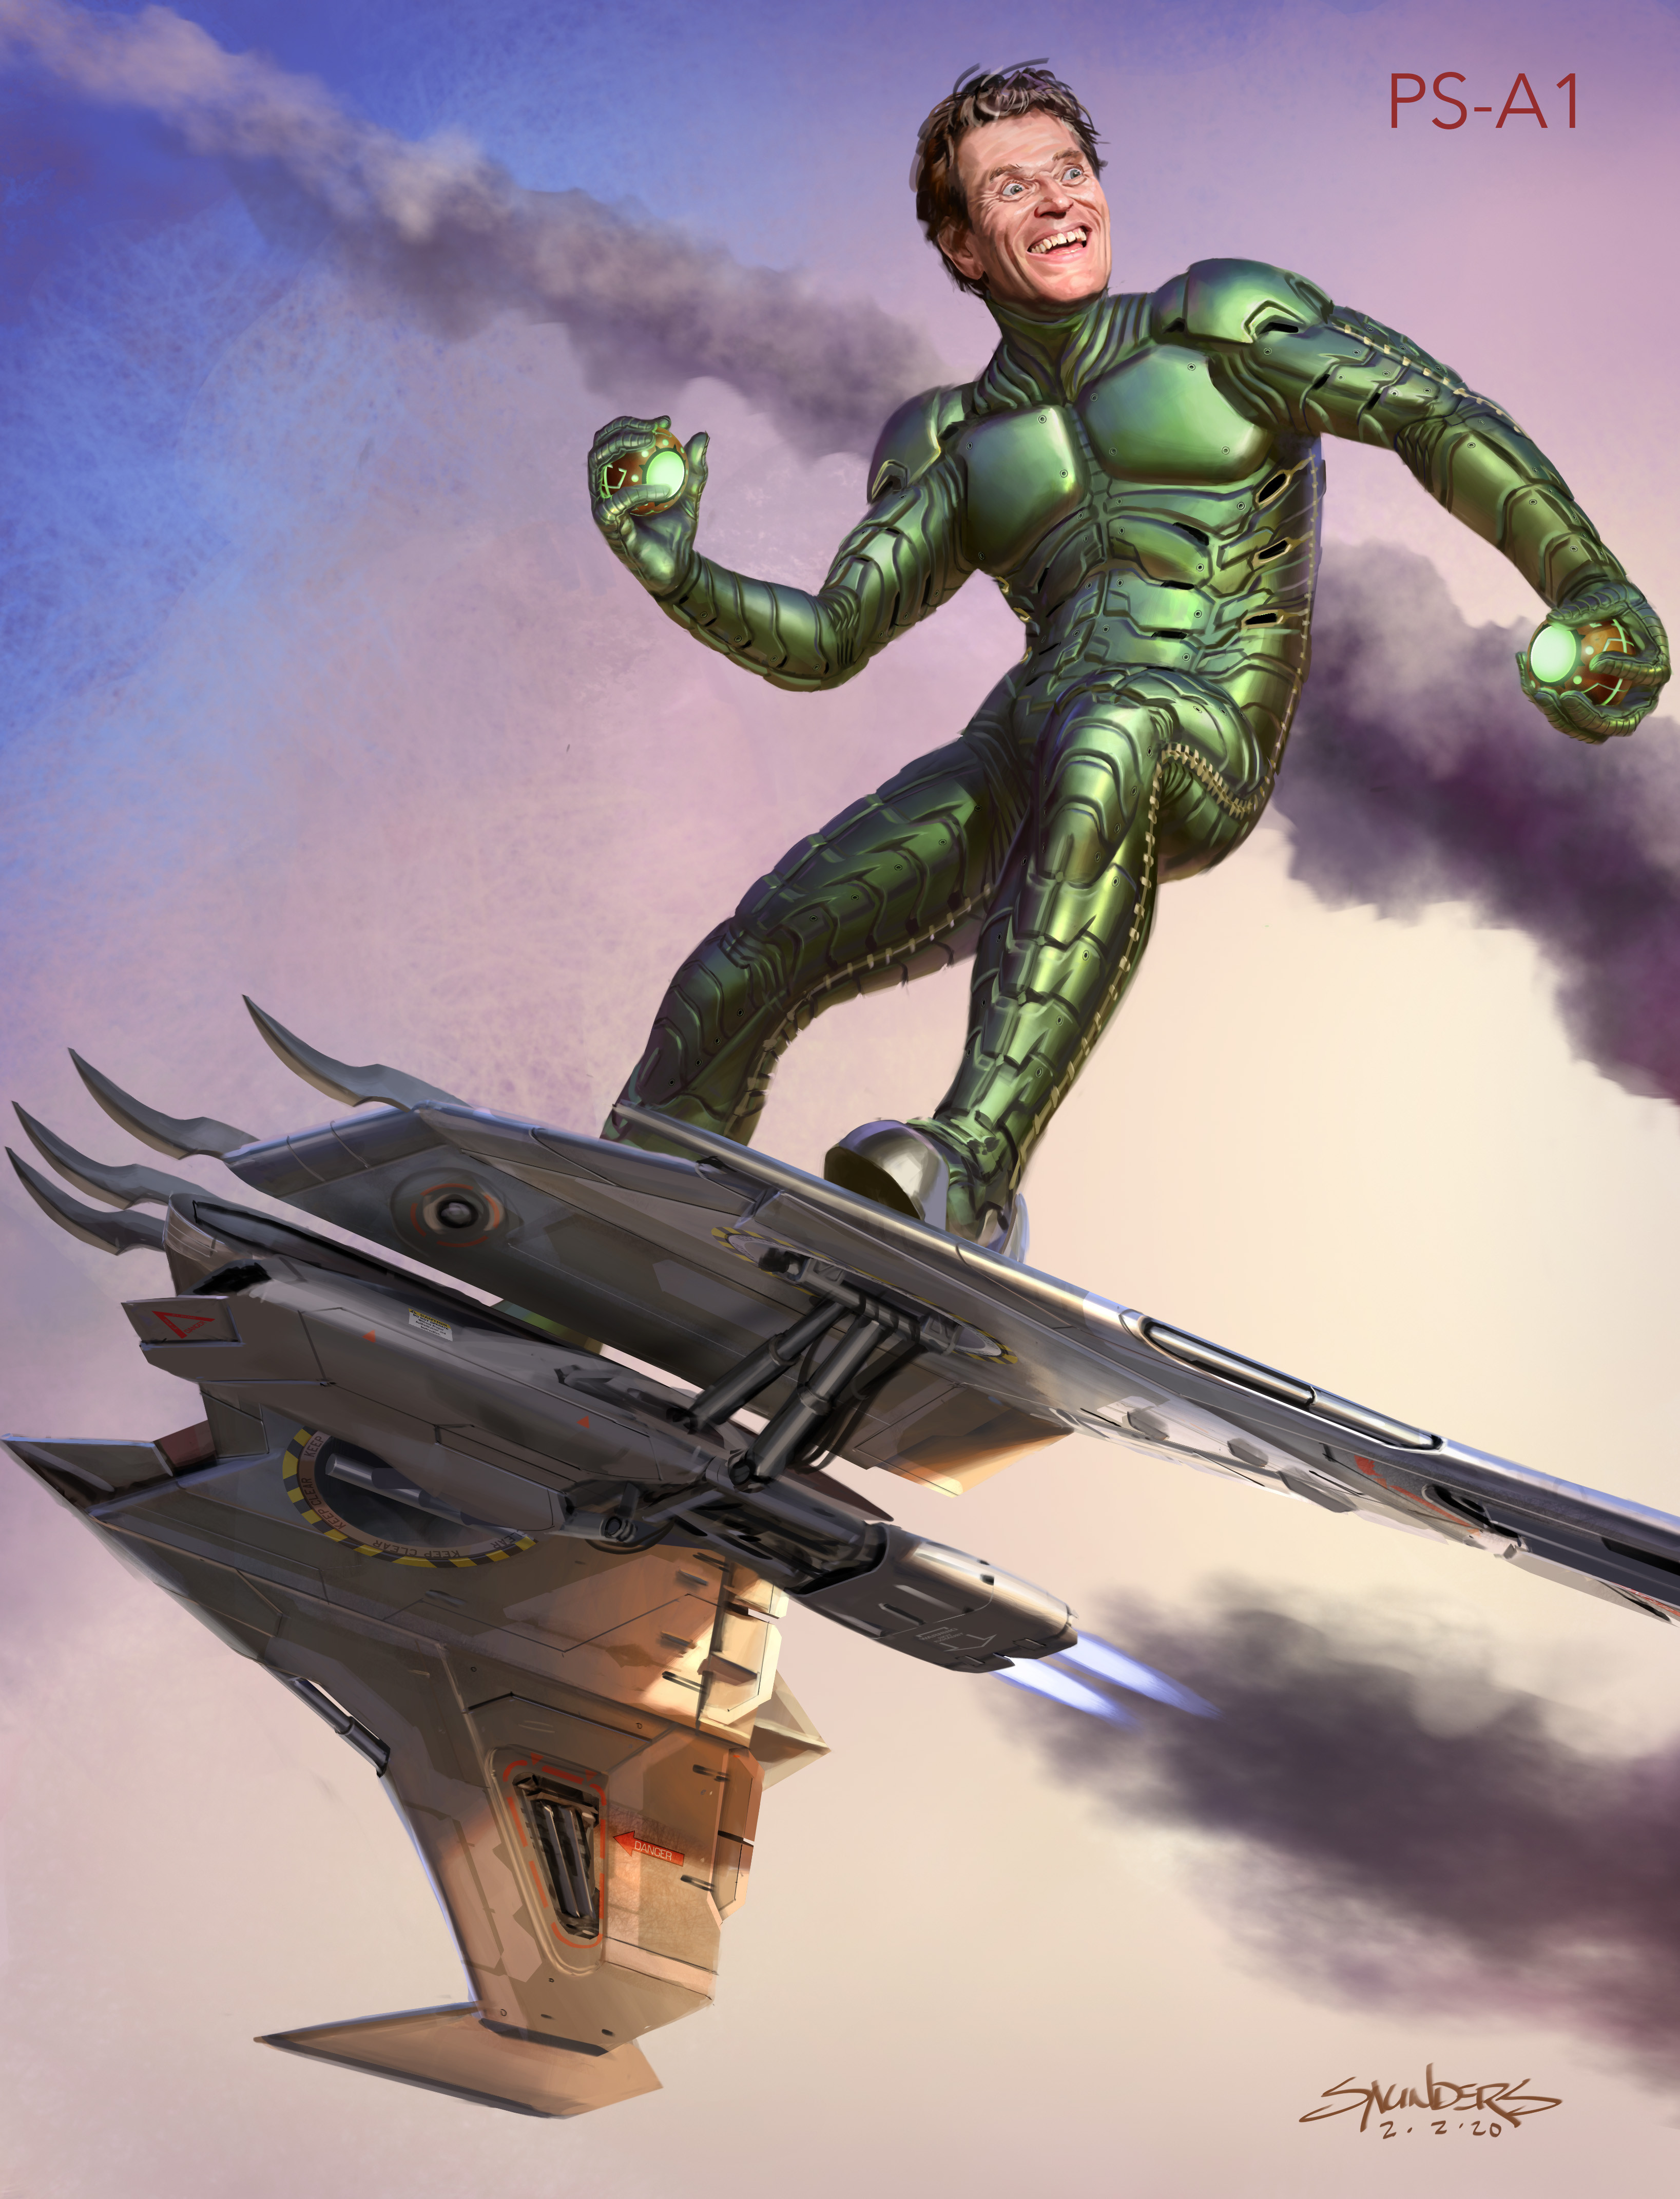 SPIDER-MAN: NO WAY HOME Concept Art Shows Unused Green Goblin